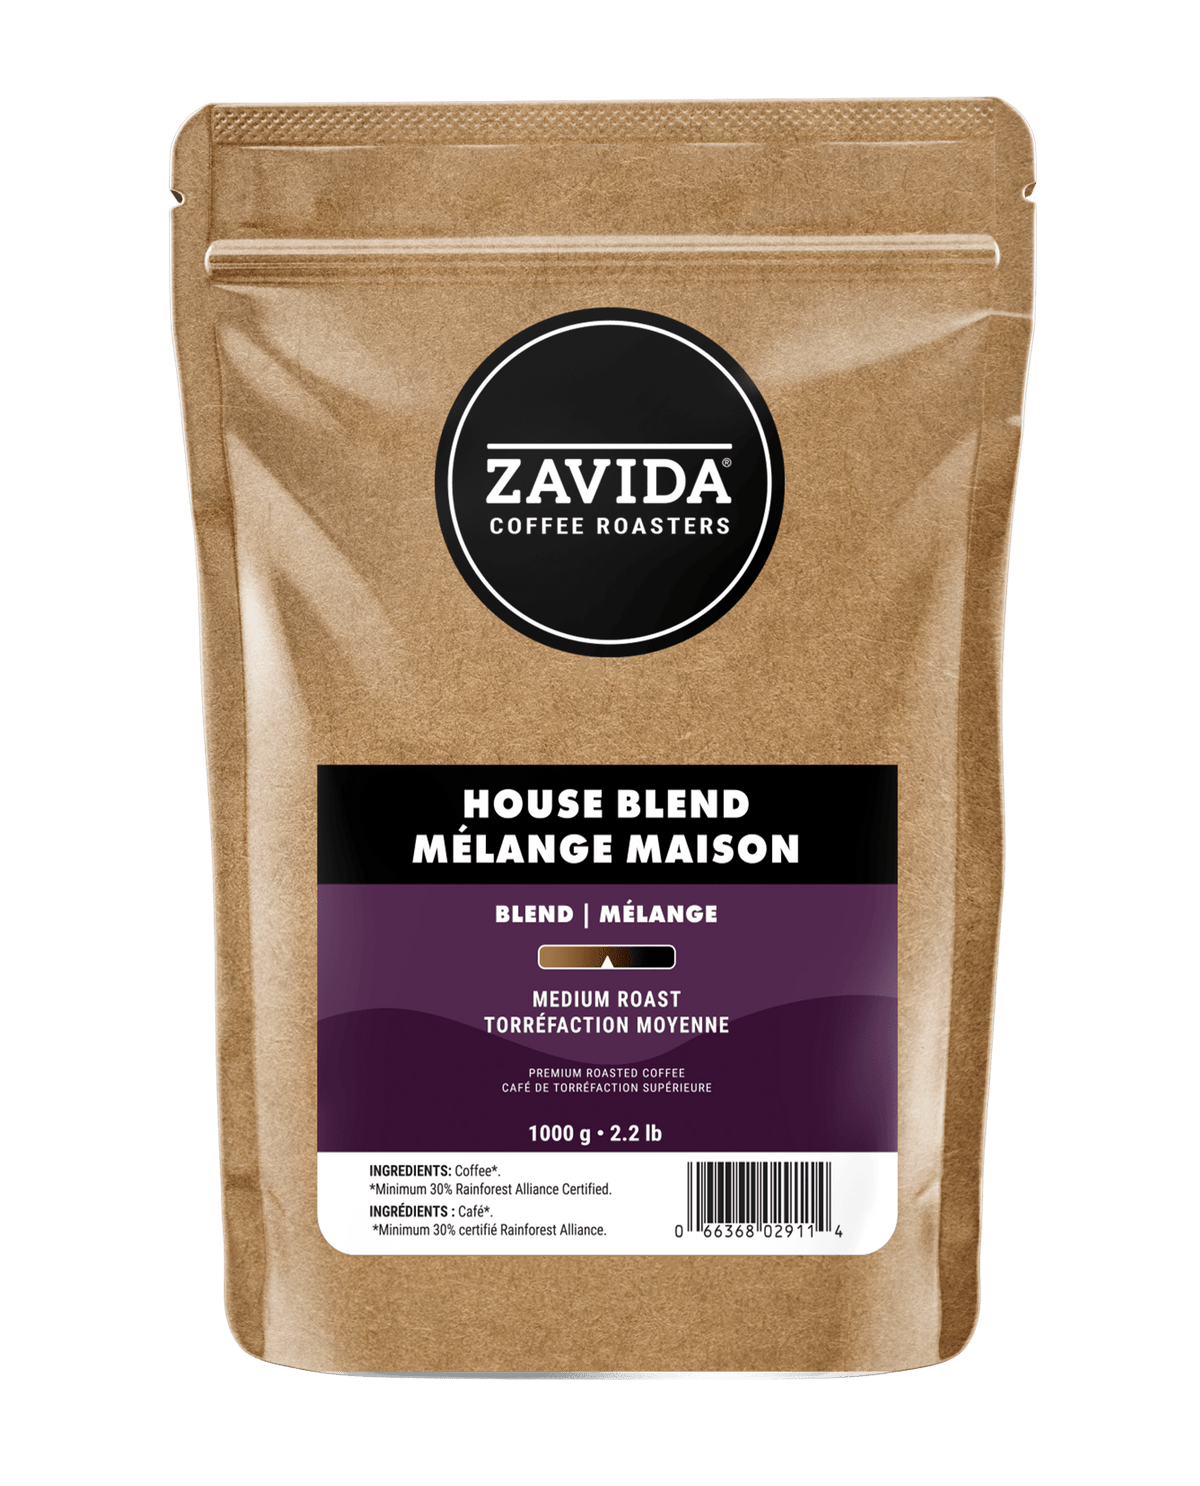 LIMITED EDITION House Blend Coffee - 1 kg - Zavida Coffee